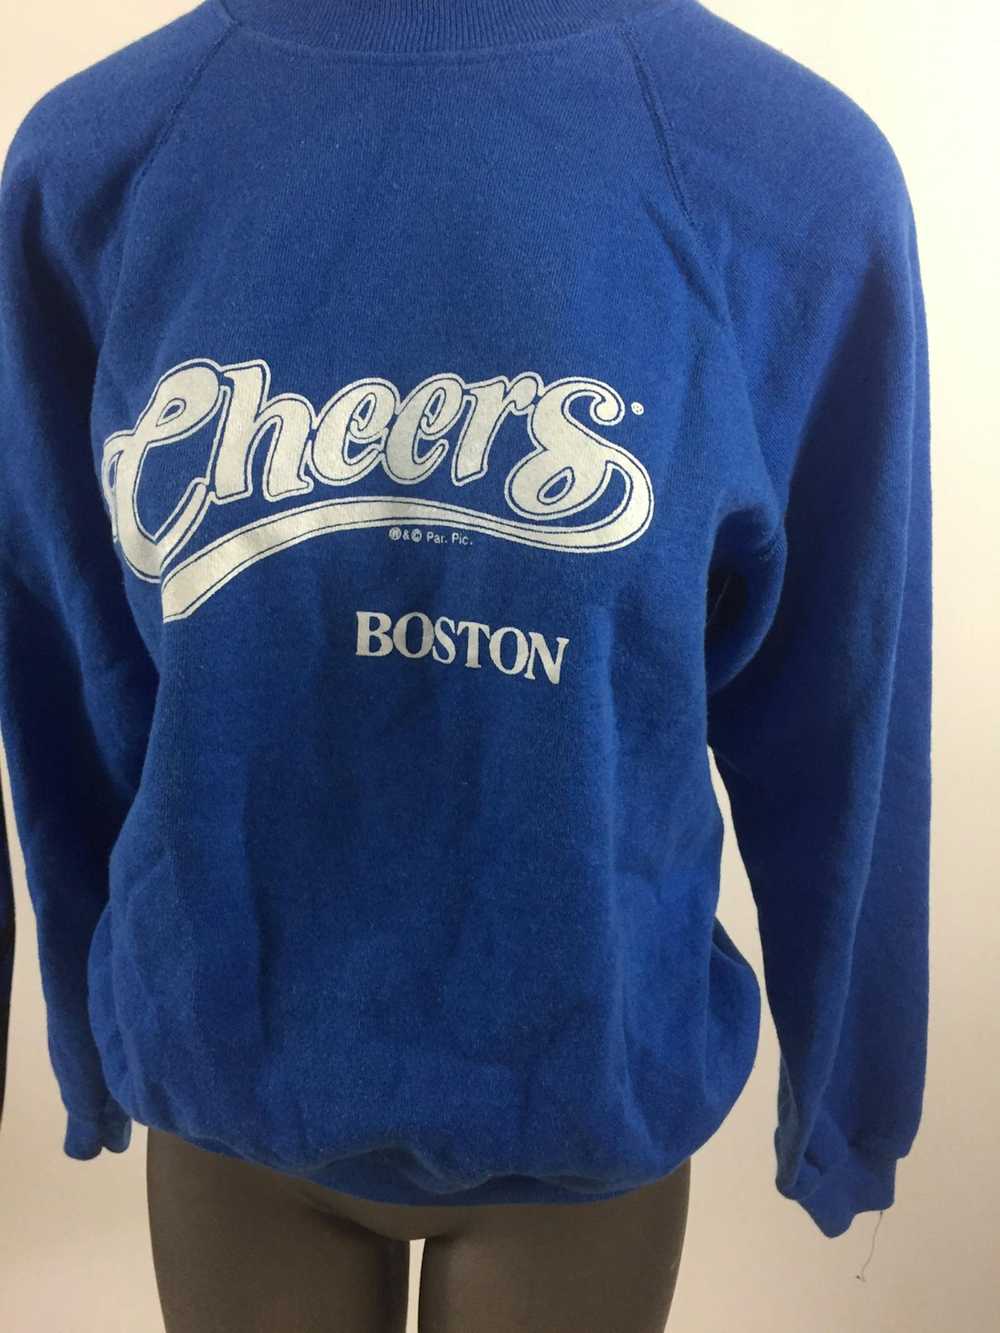 Hanes Vintage Hanes Cheers Boston Sweater - image 3